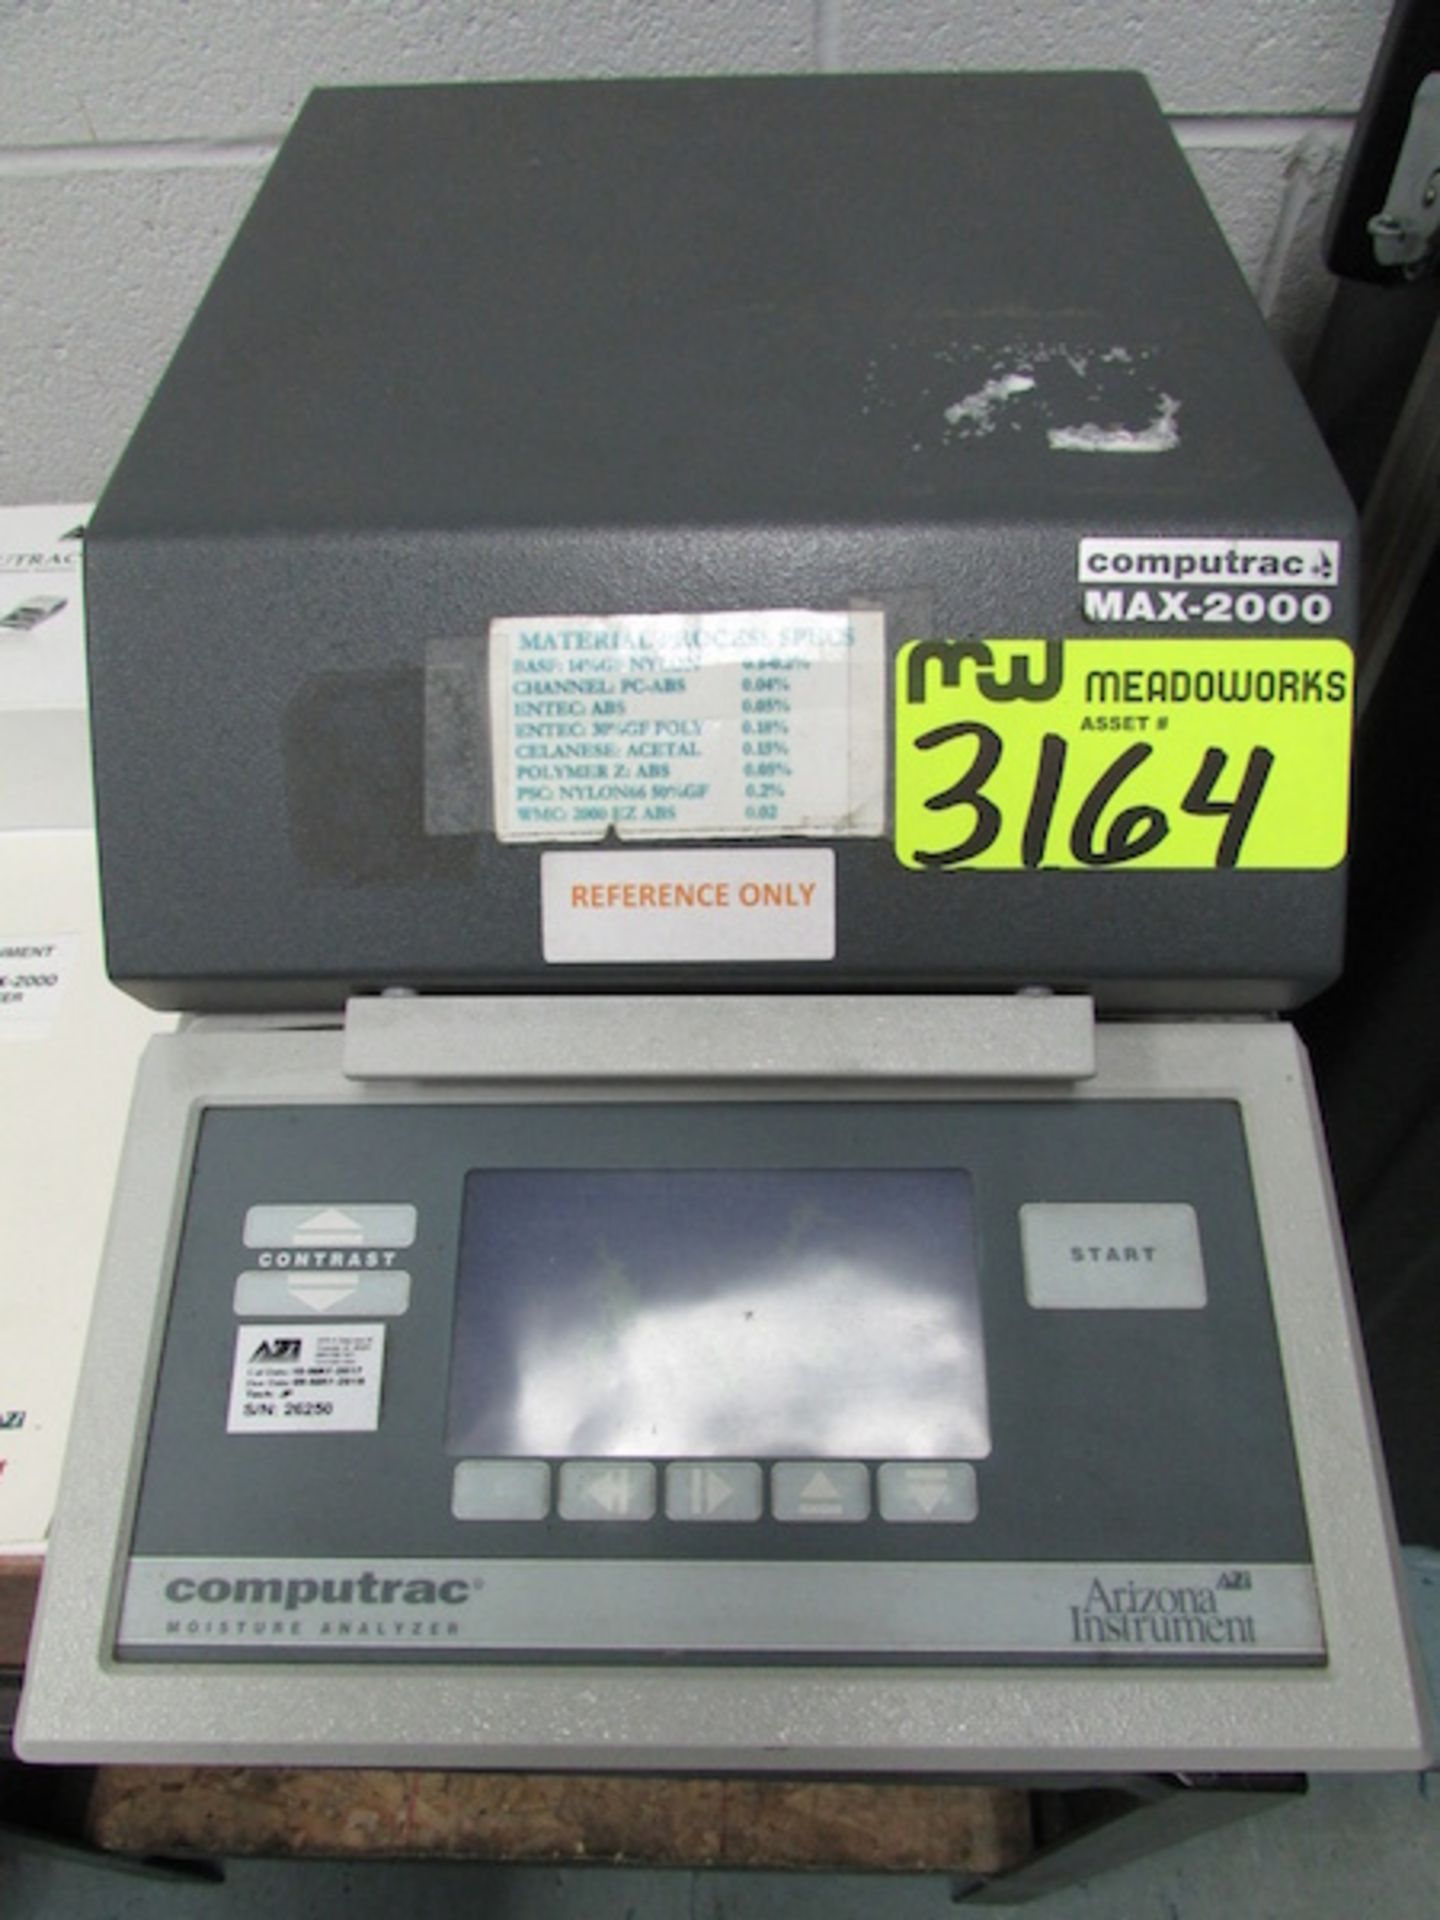 Arizona Instruments Computrac Max-2000 Moisture Analyzer - Image 2 of 5